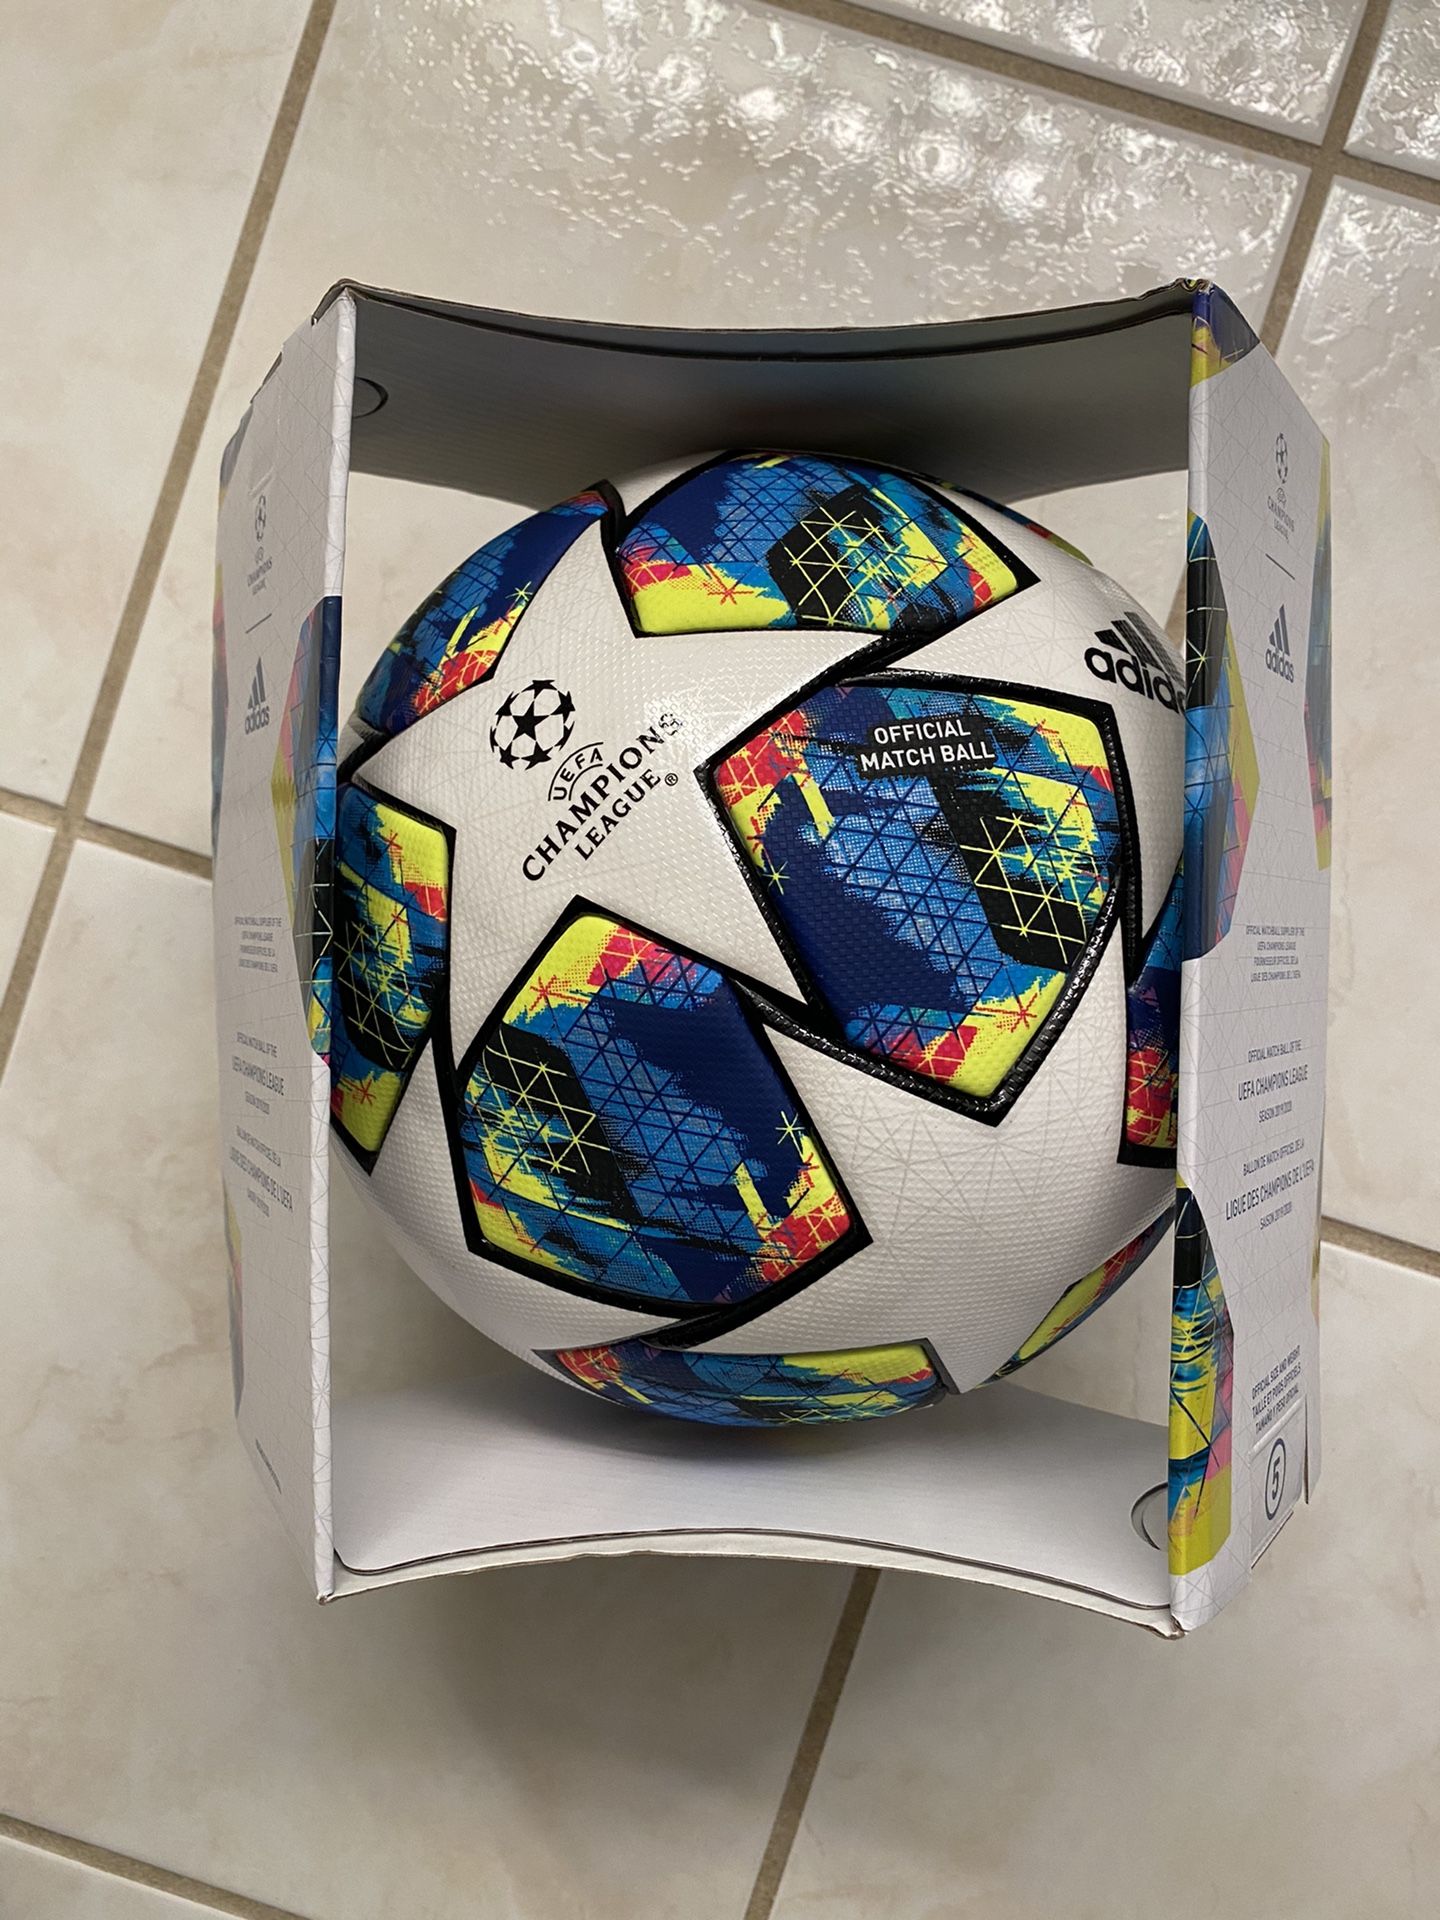 Official match ball UEFA Champions League 19/20